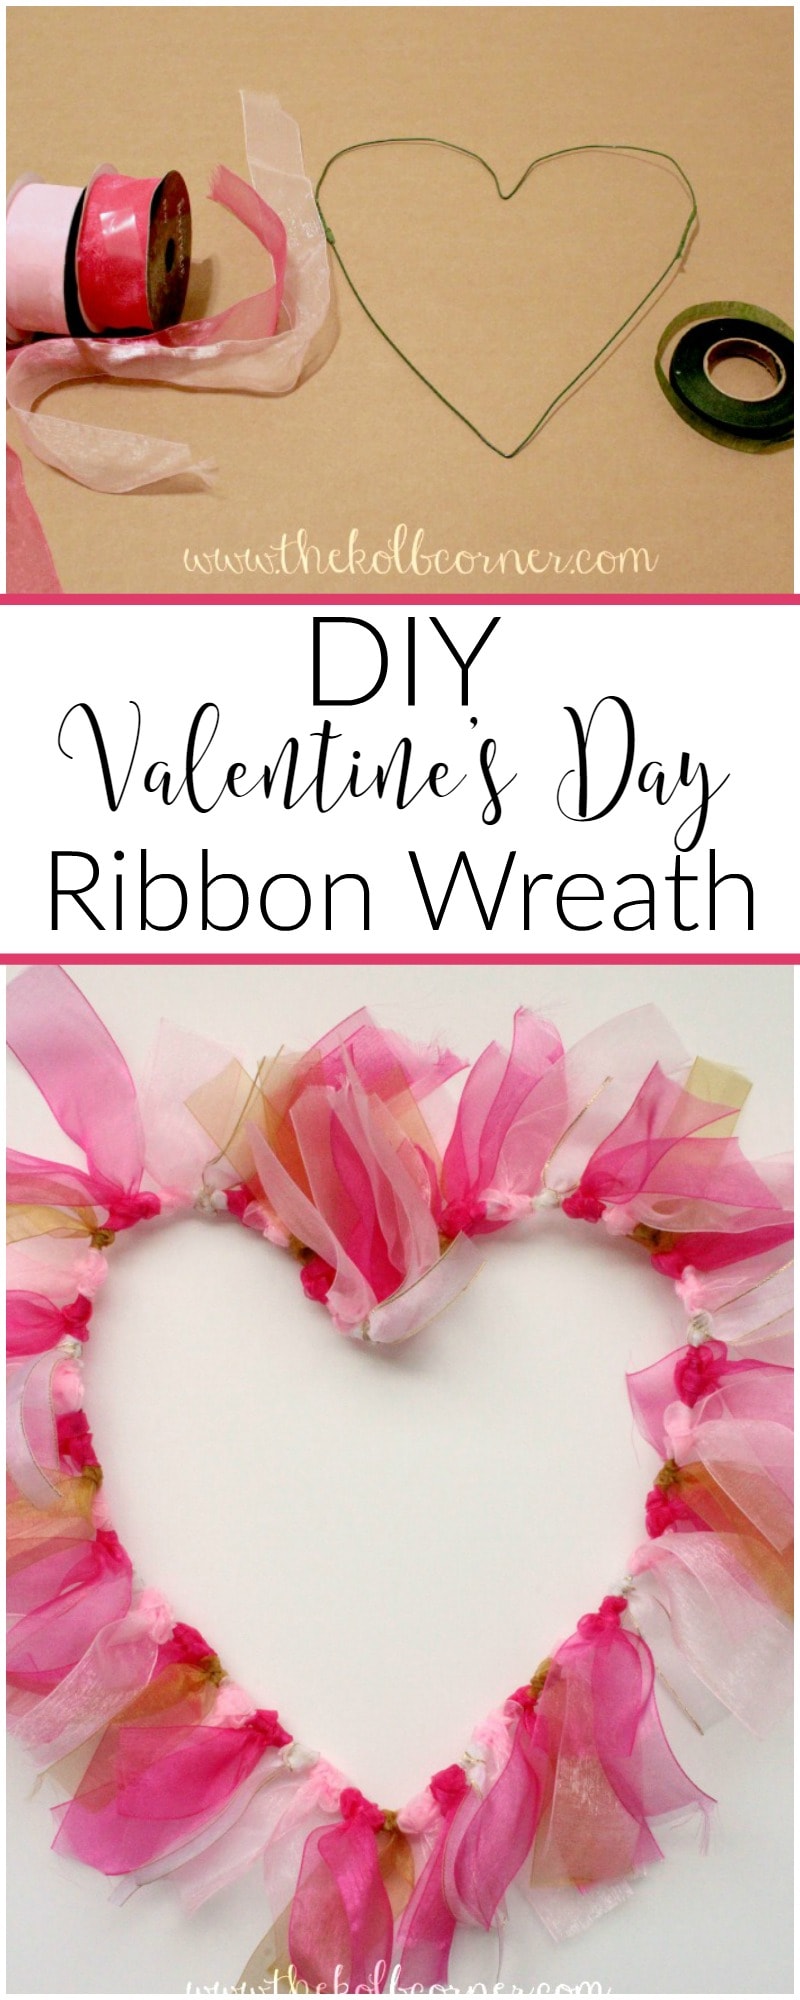 DIY Valentine's Day Ribbon Wreath